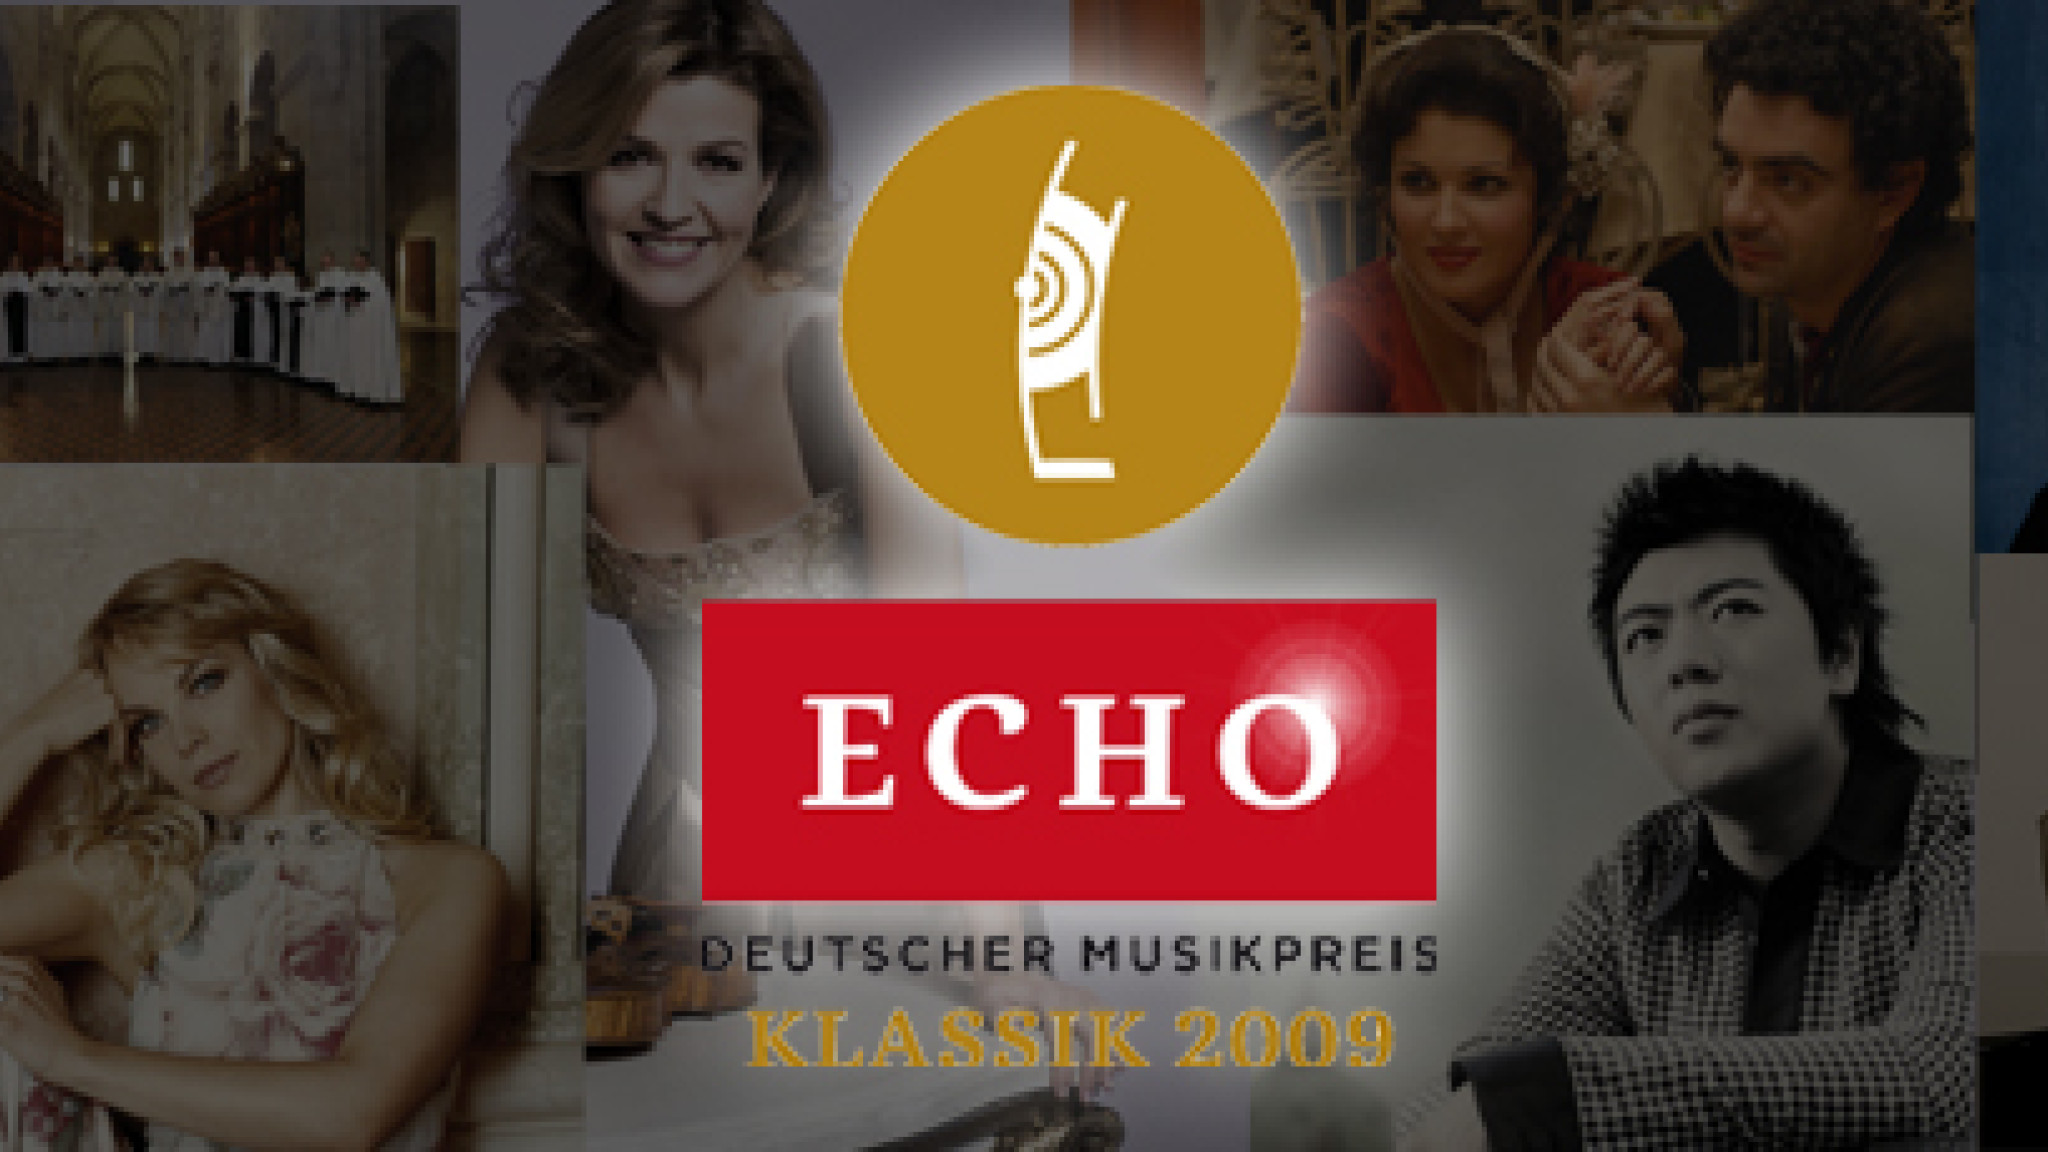 Echo Klassik 2009 © Deutsche Phono-Akademie/ Deutsche Grammophon / Decca / Universal Music